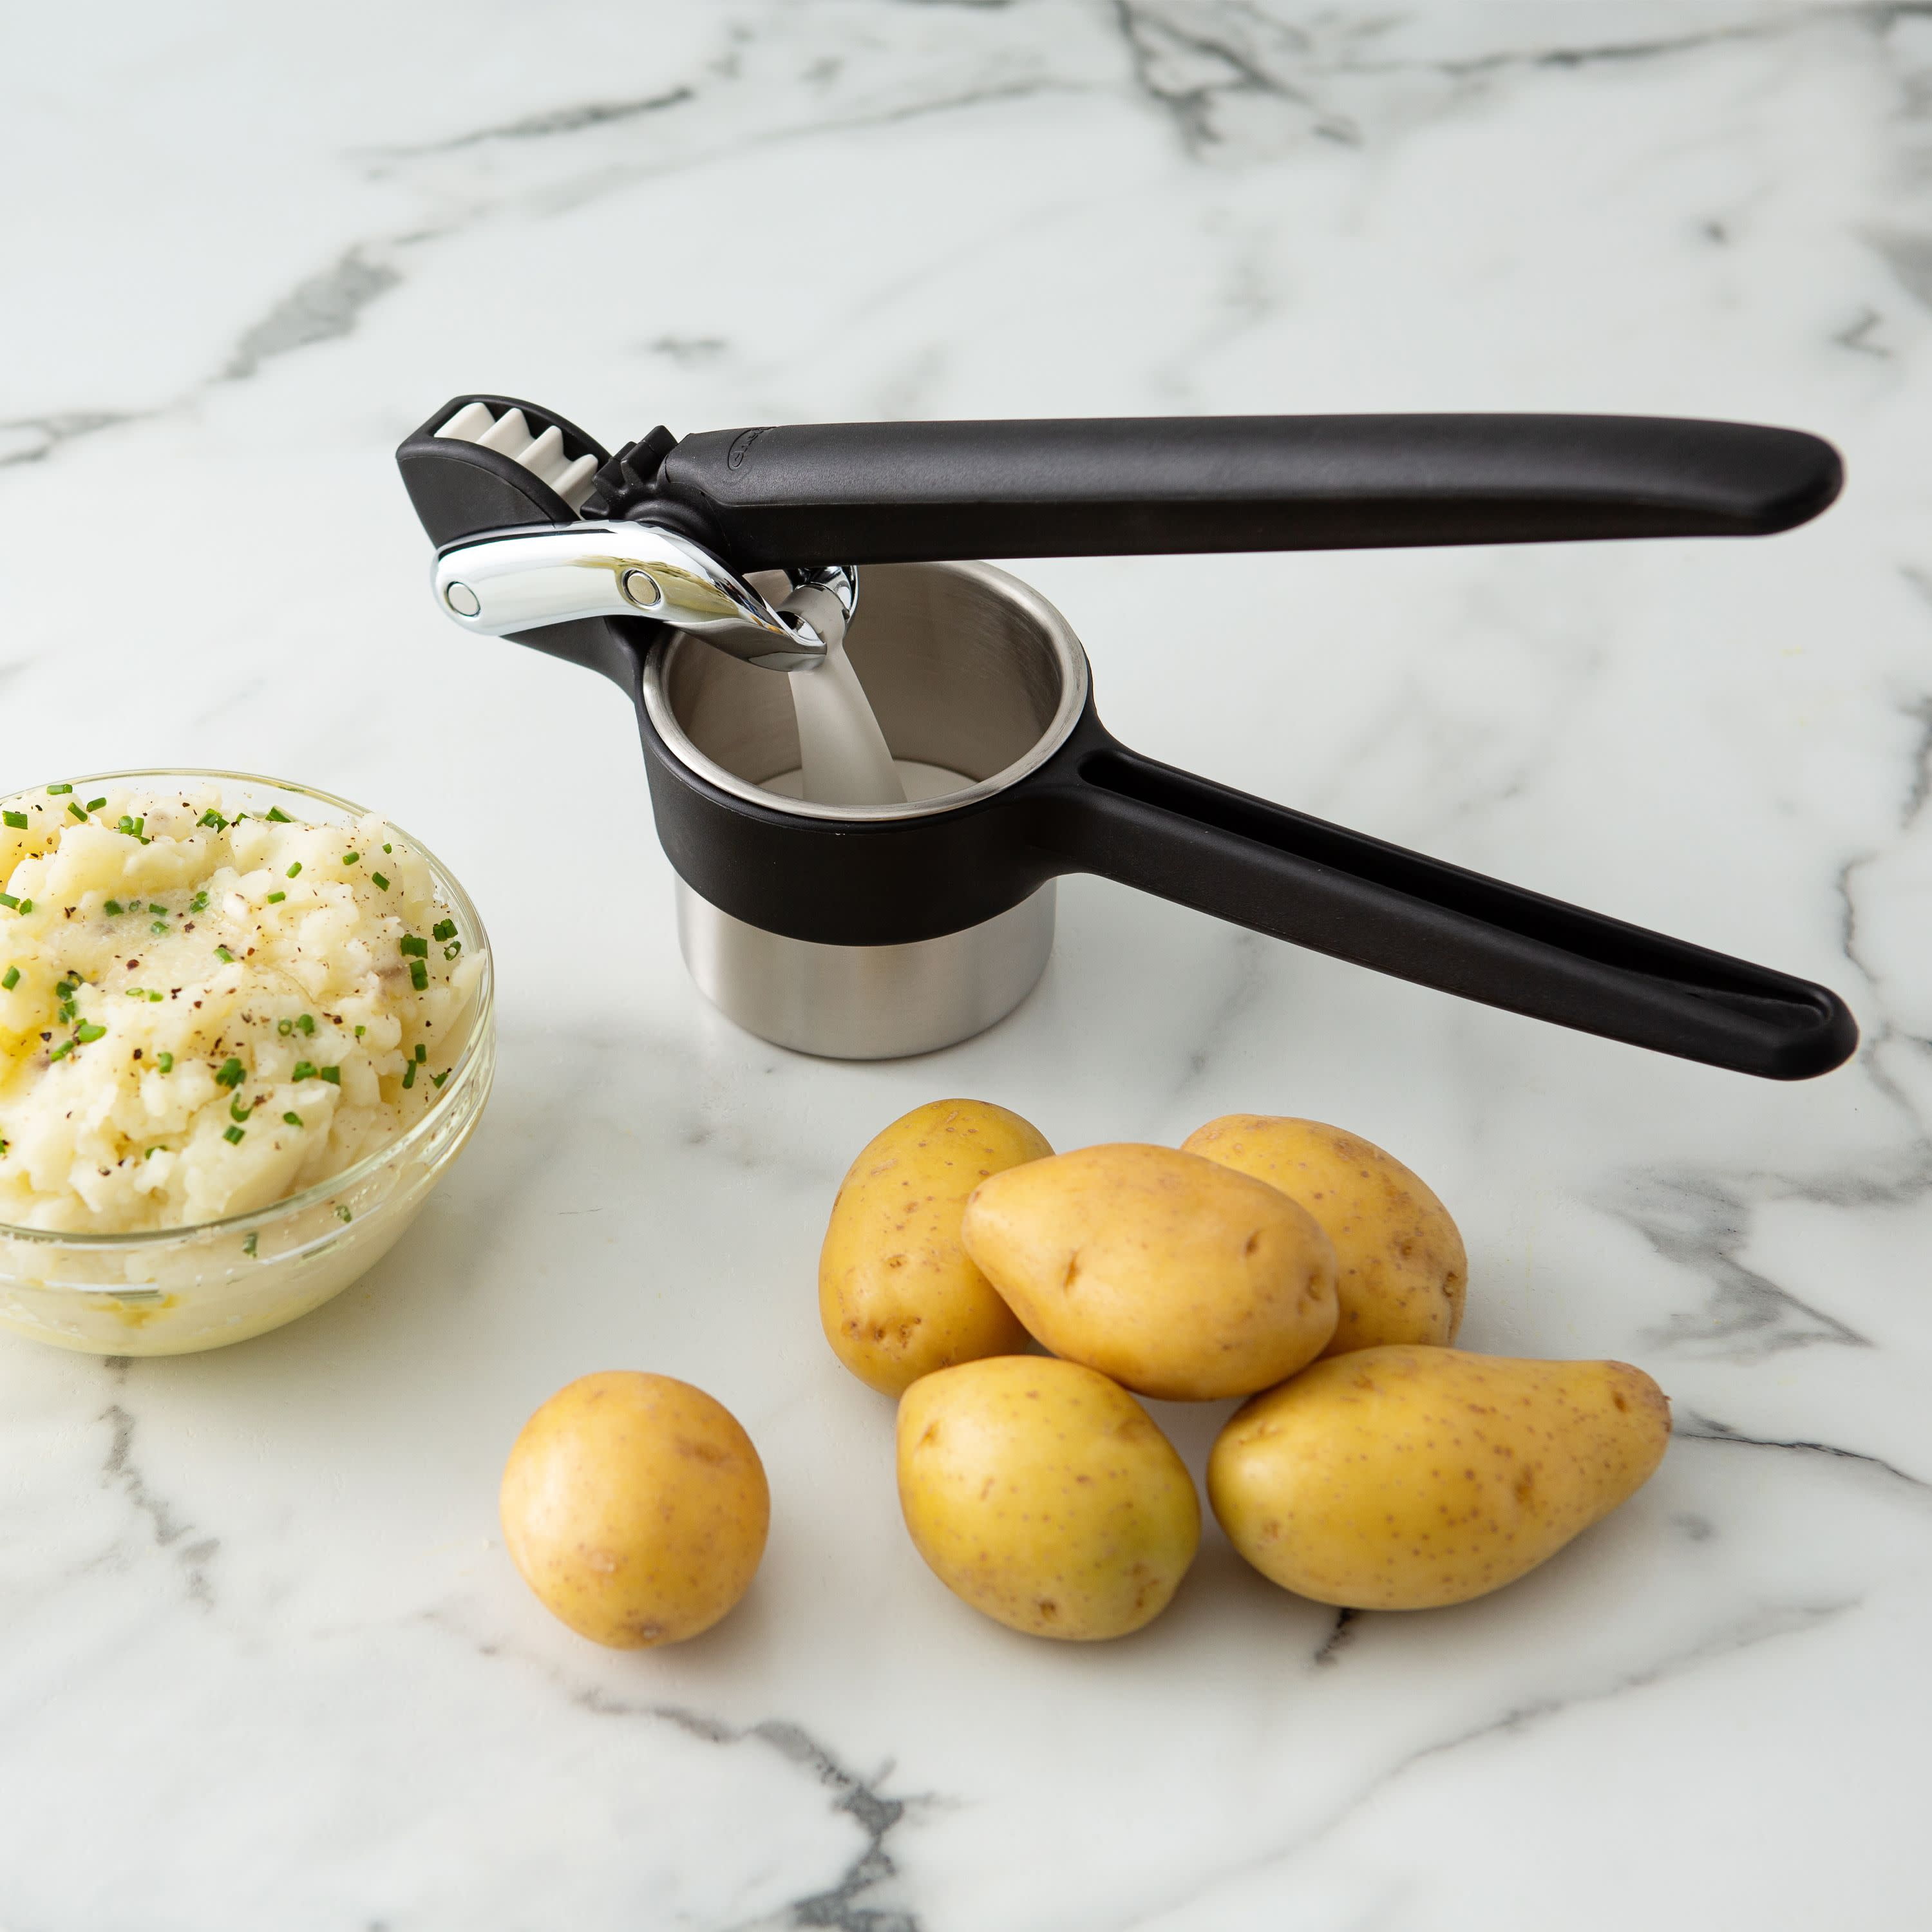 Chef'n Potato Ricer Press, Stainless Steel, Dishwasher Safe on Food52